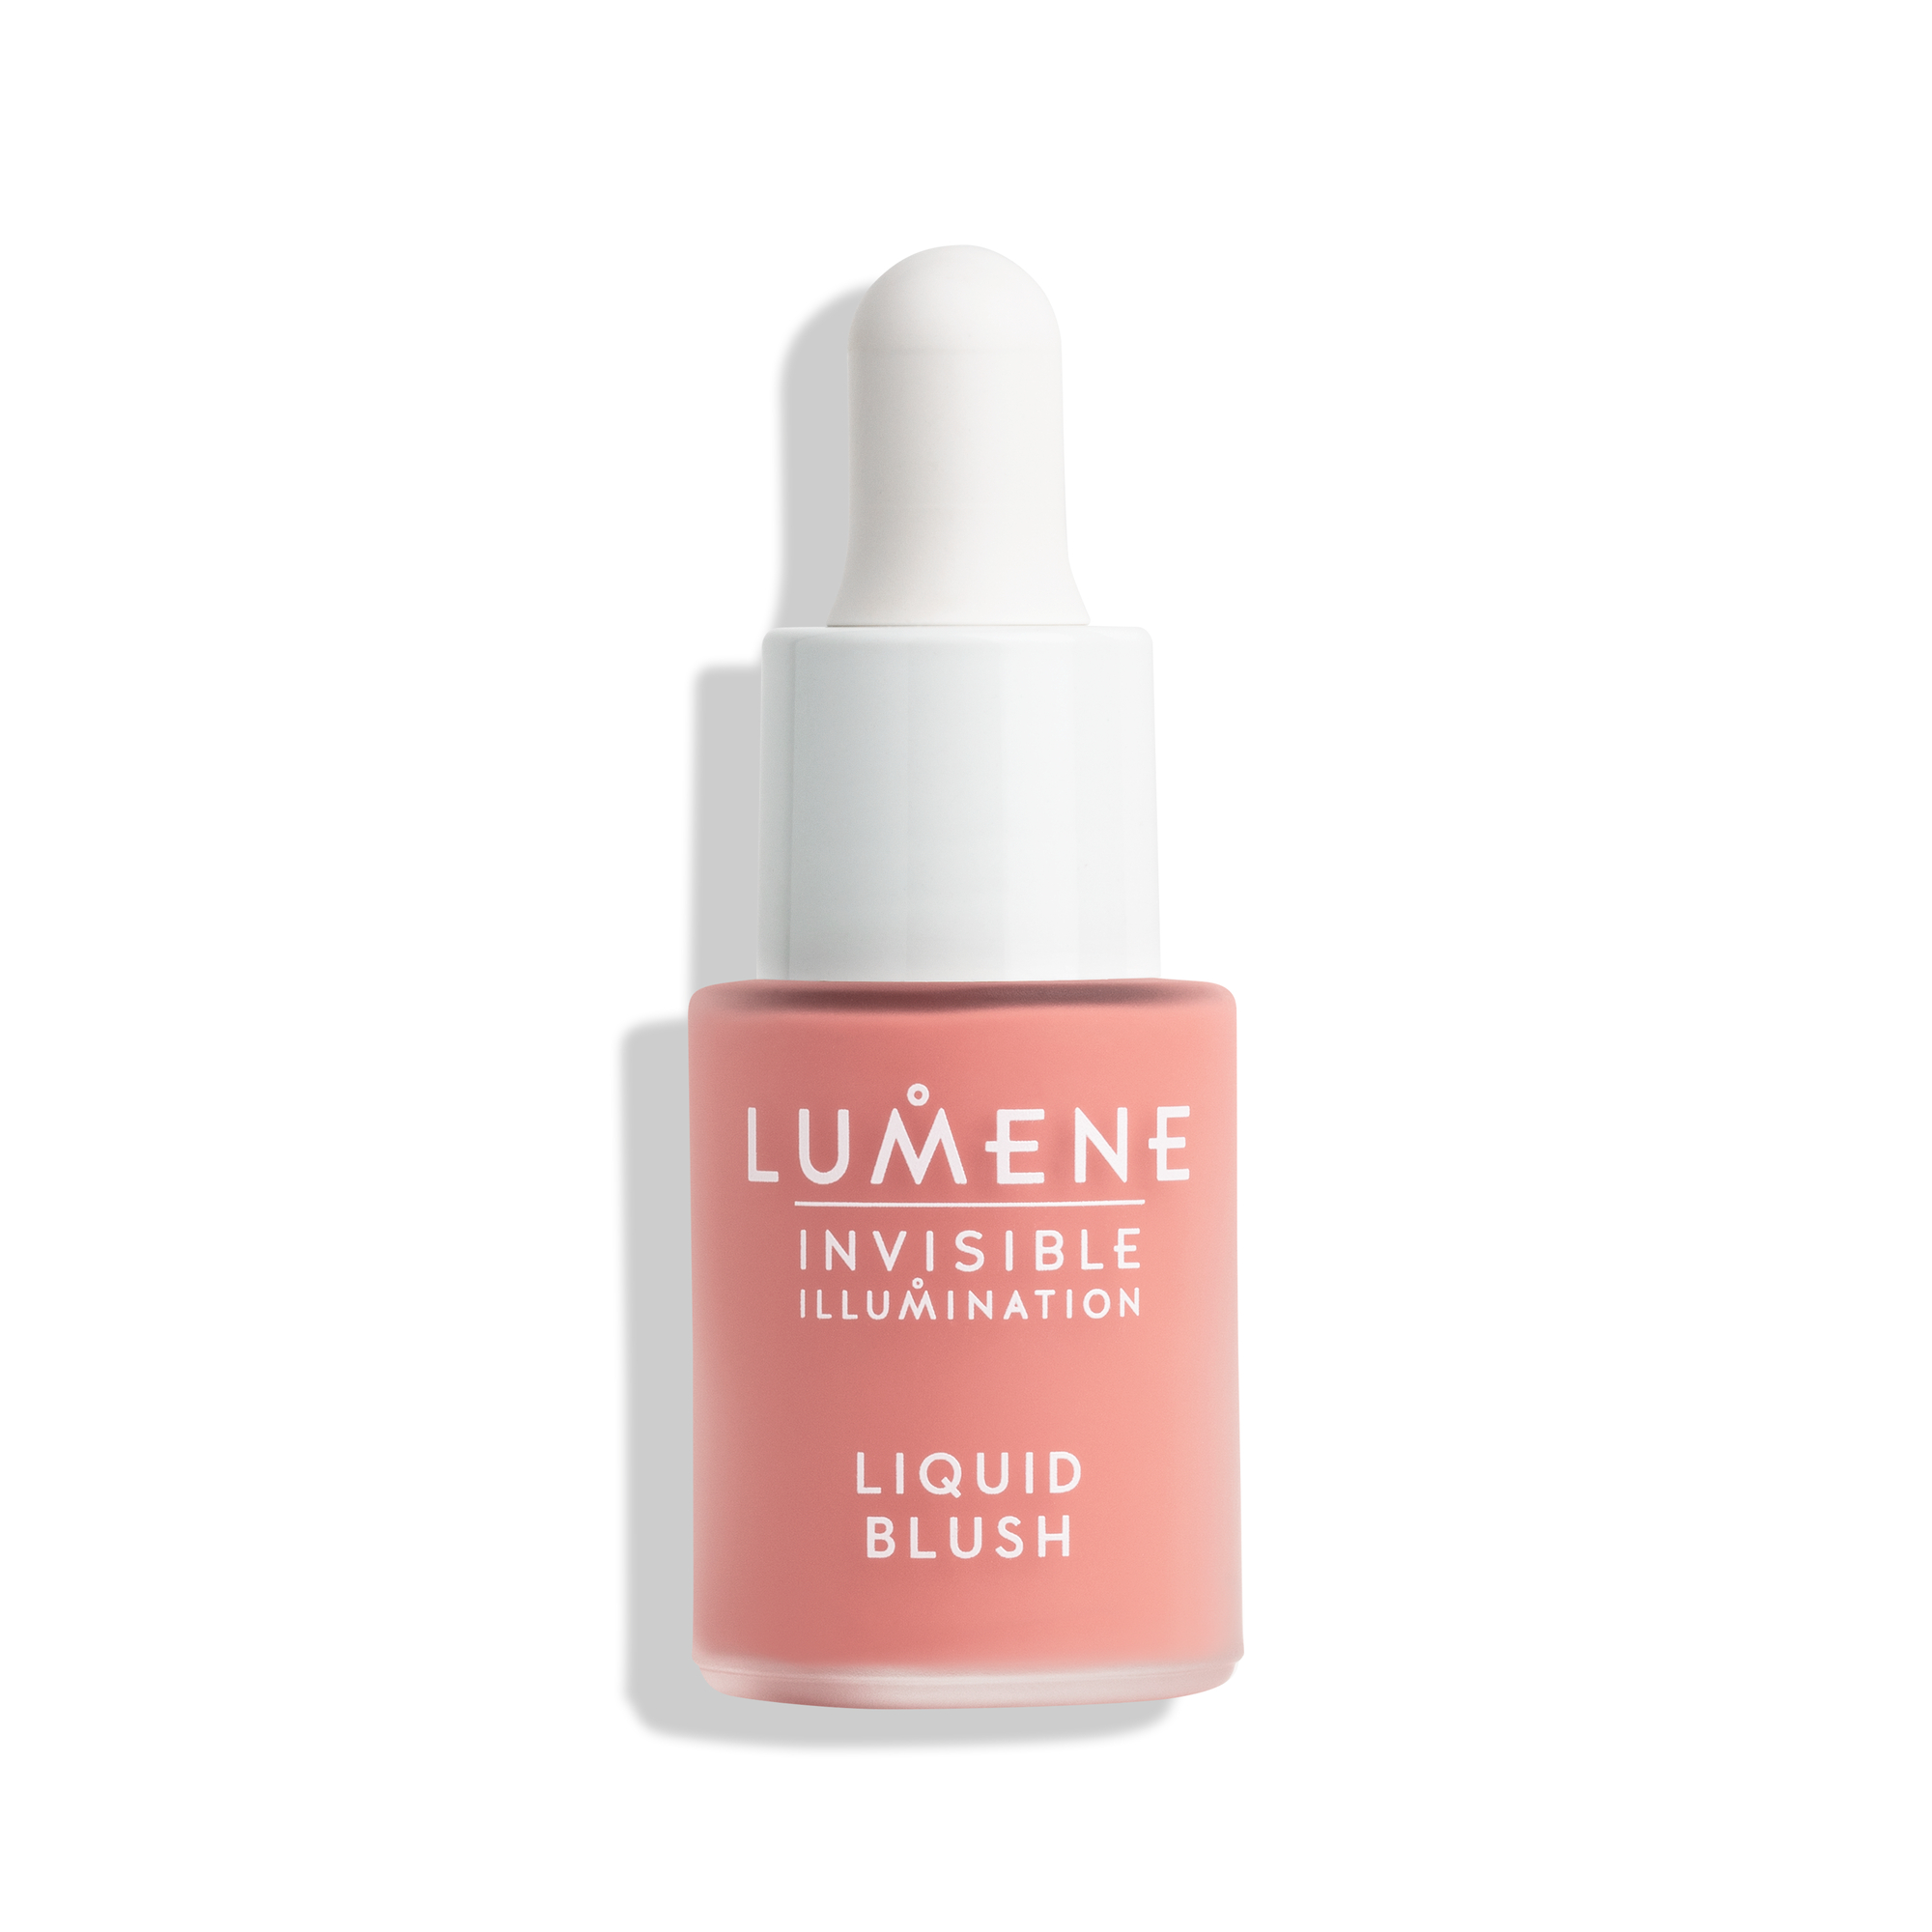 Lumene Invisible Illumination Liquid Blush, Pink Blossom, 15 ml